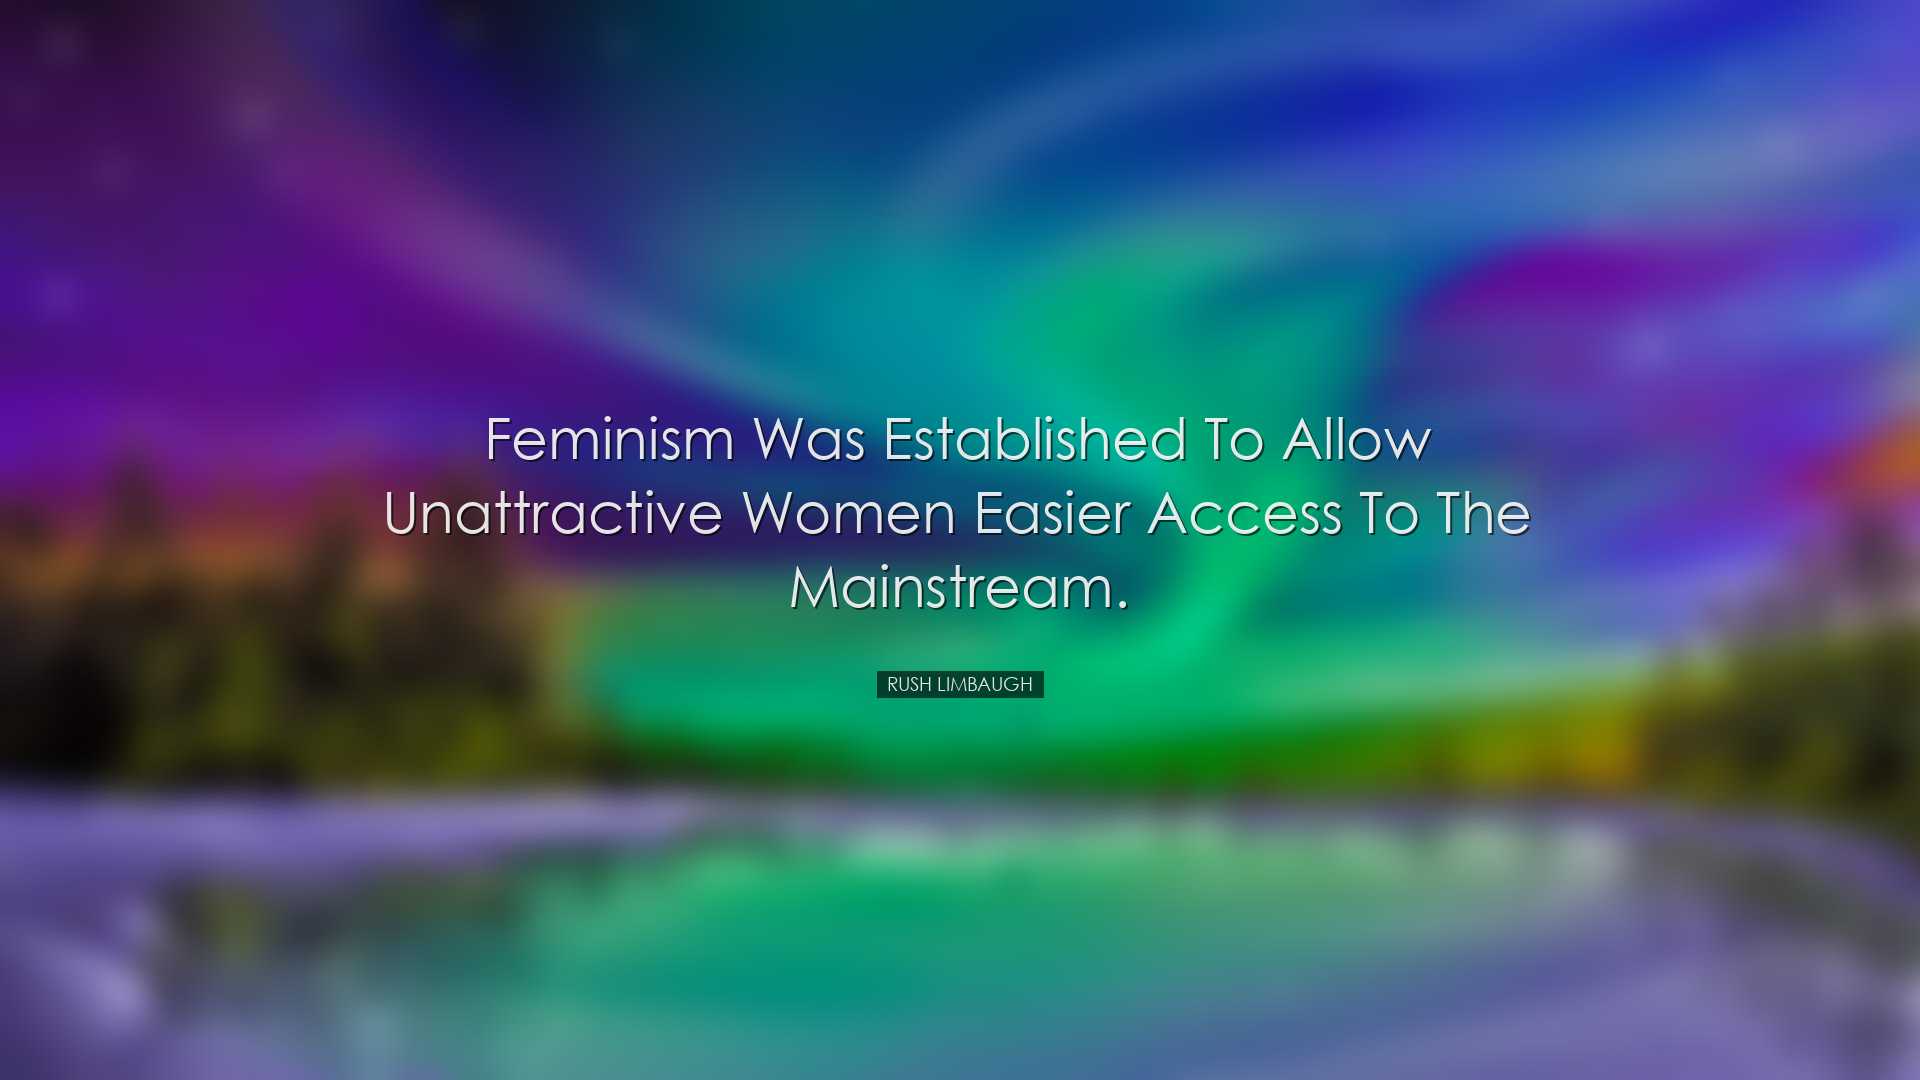 Feminism was established to allow unattractive women easier access